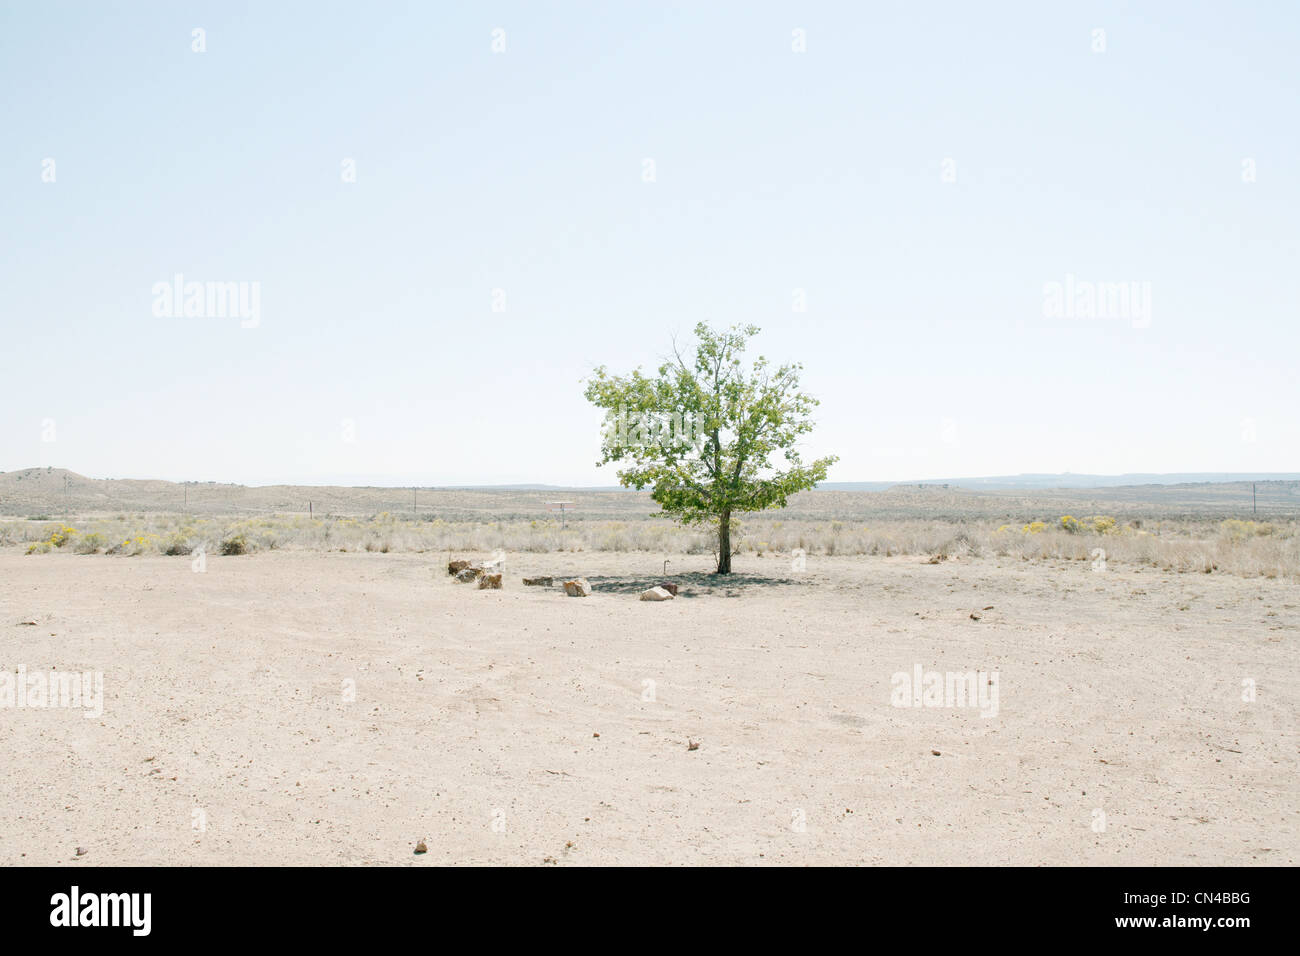 Lone tree in desert landscape Stock Photo